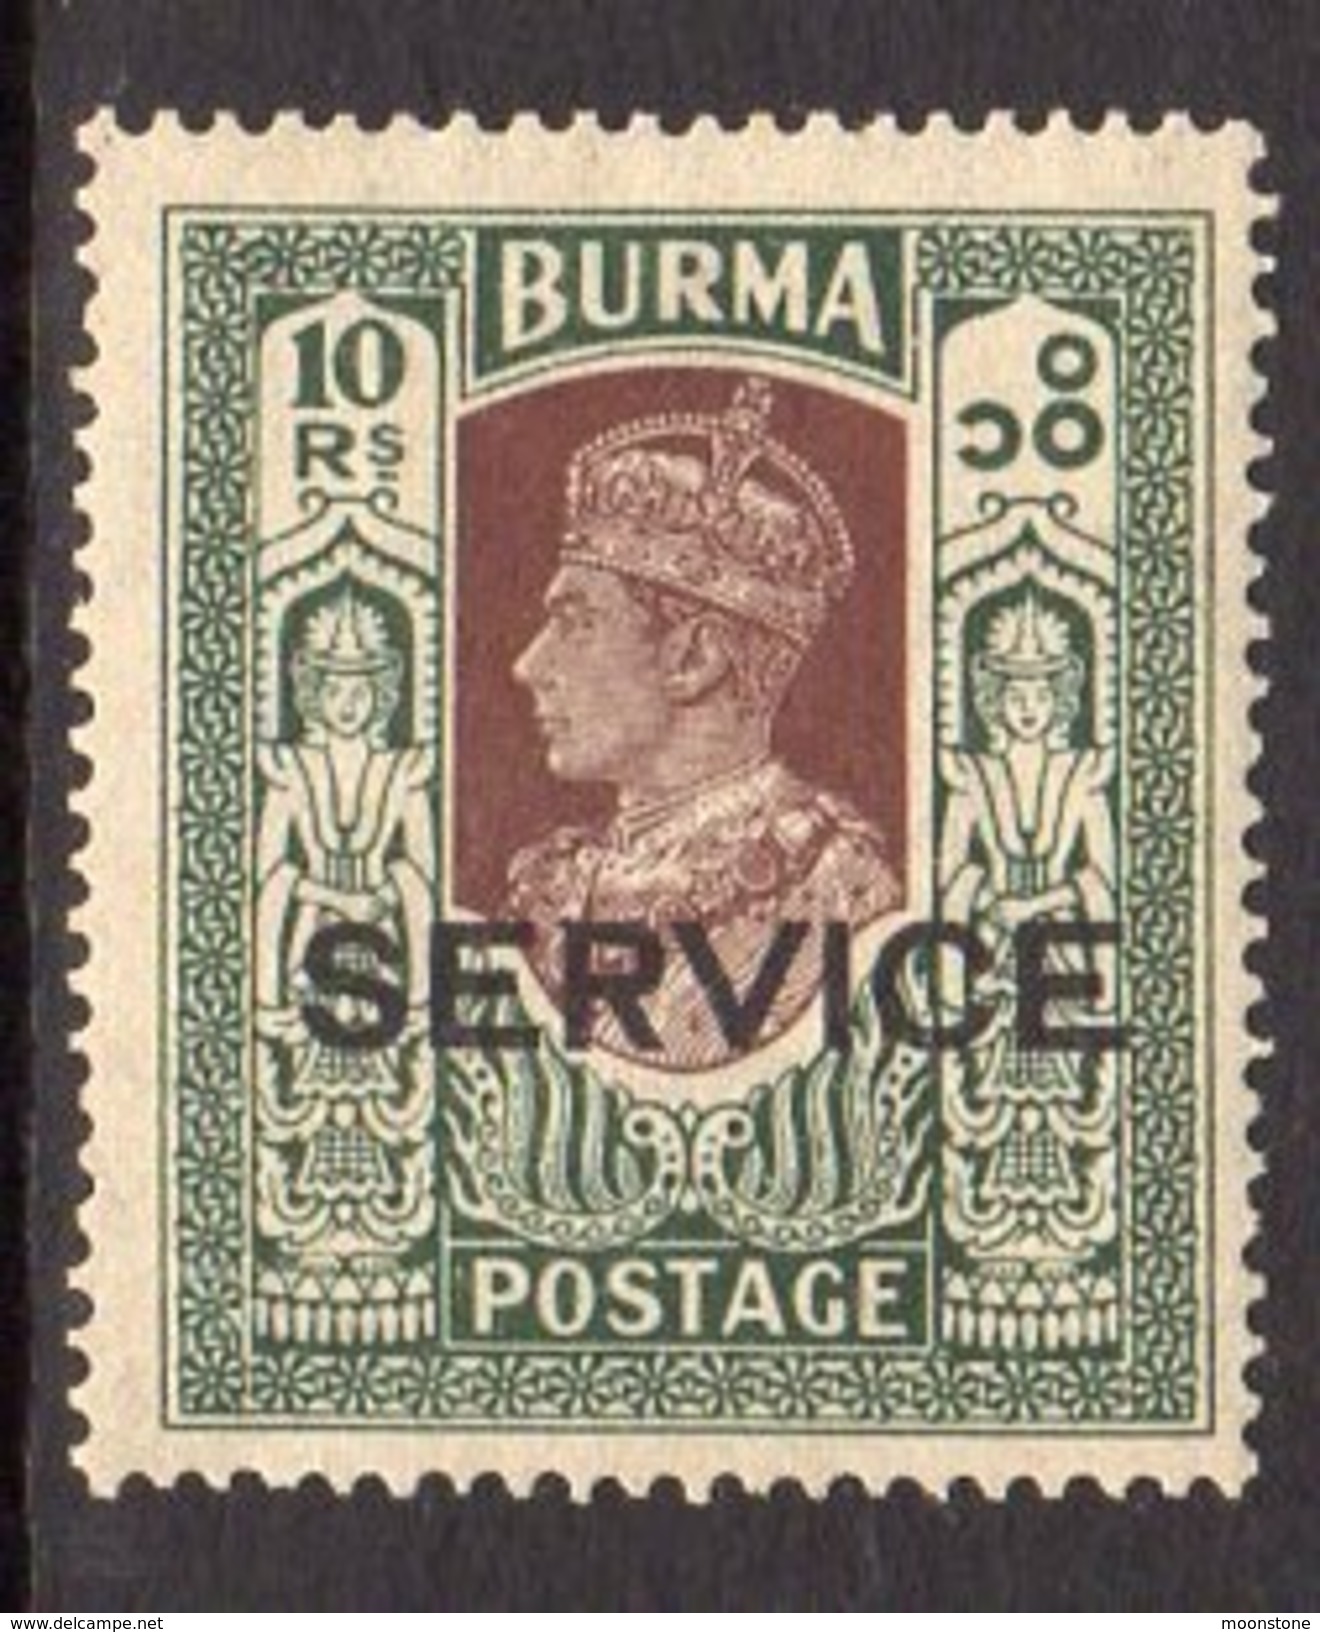 Burma GVI 1939 SERVICE 10r. Value, Hinged Mint, SG O27 (D) - Burma (...-1947)